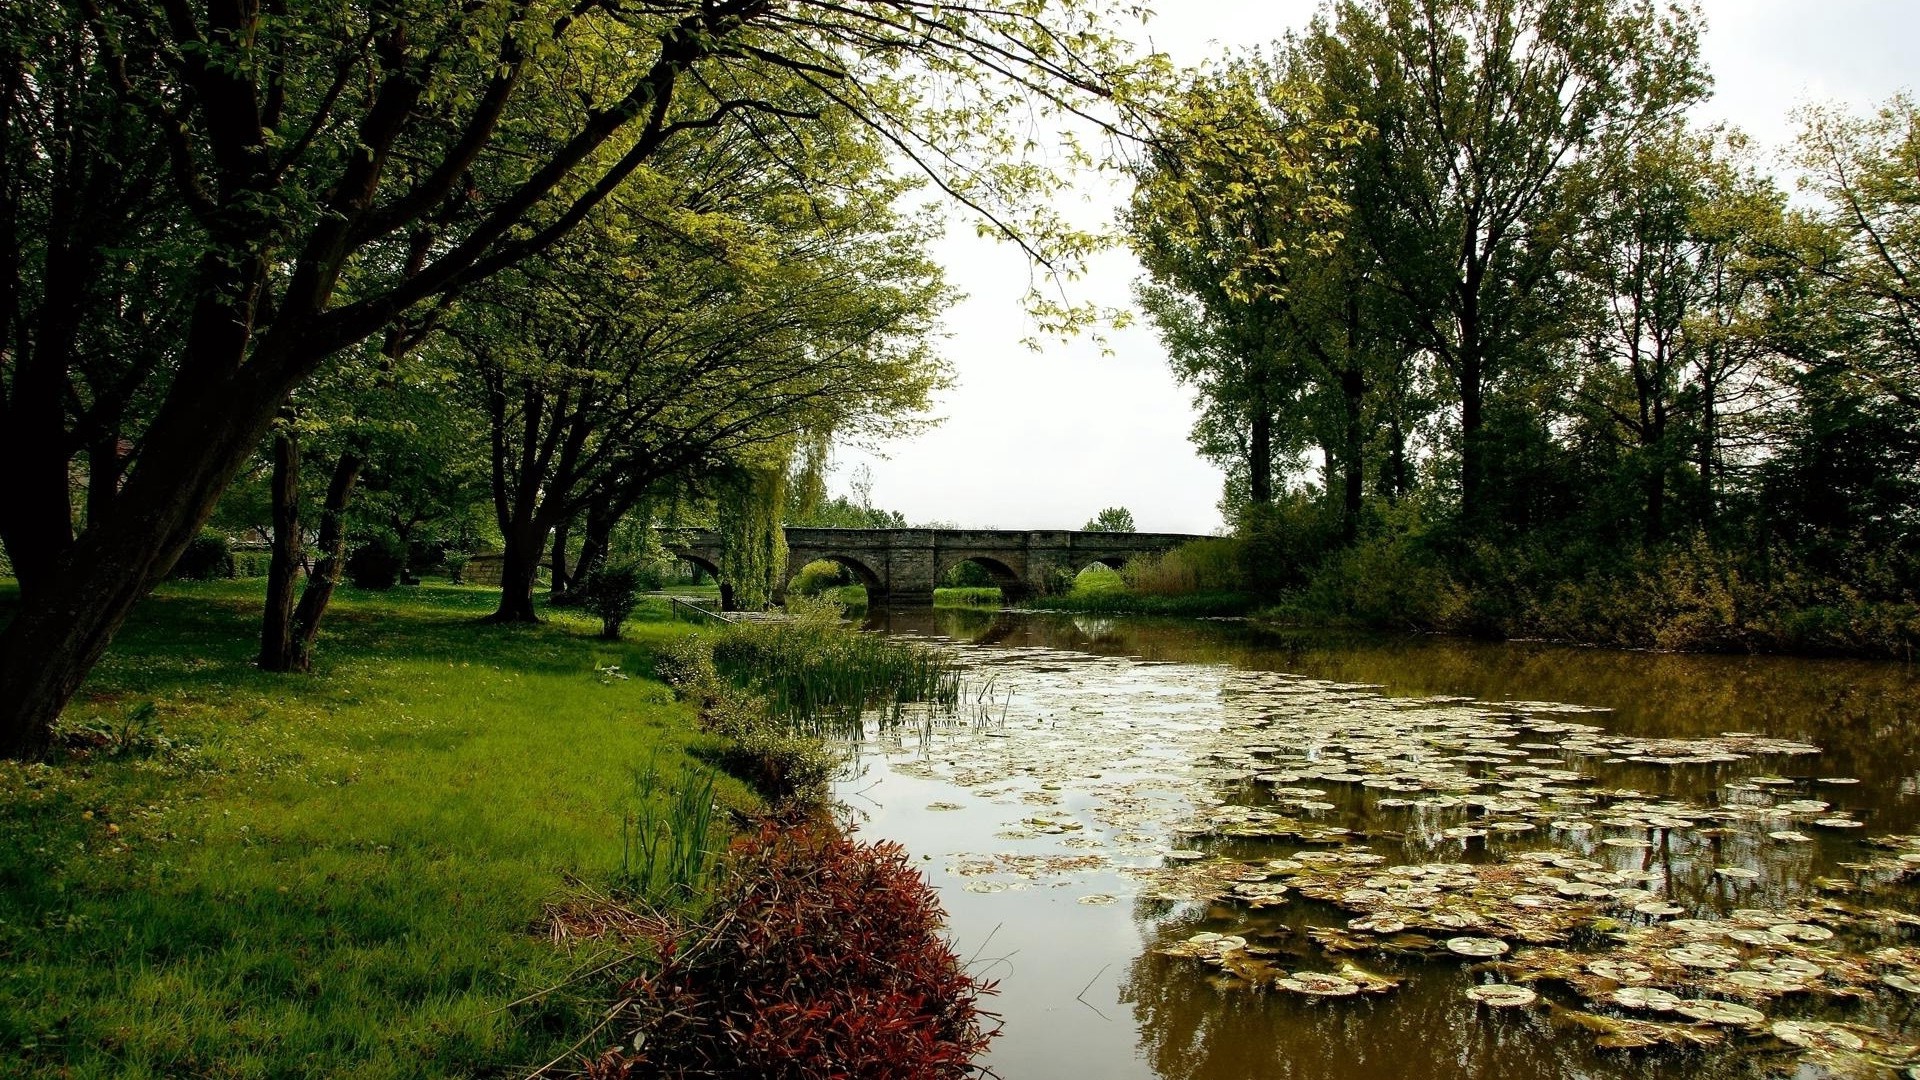 1920x1080 wallpapers: pond, water lilies, trees, bridge, park (image)